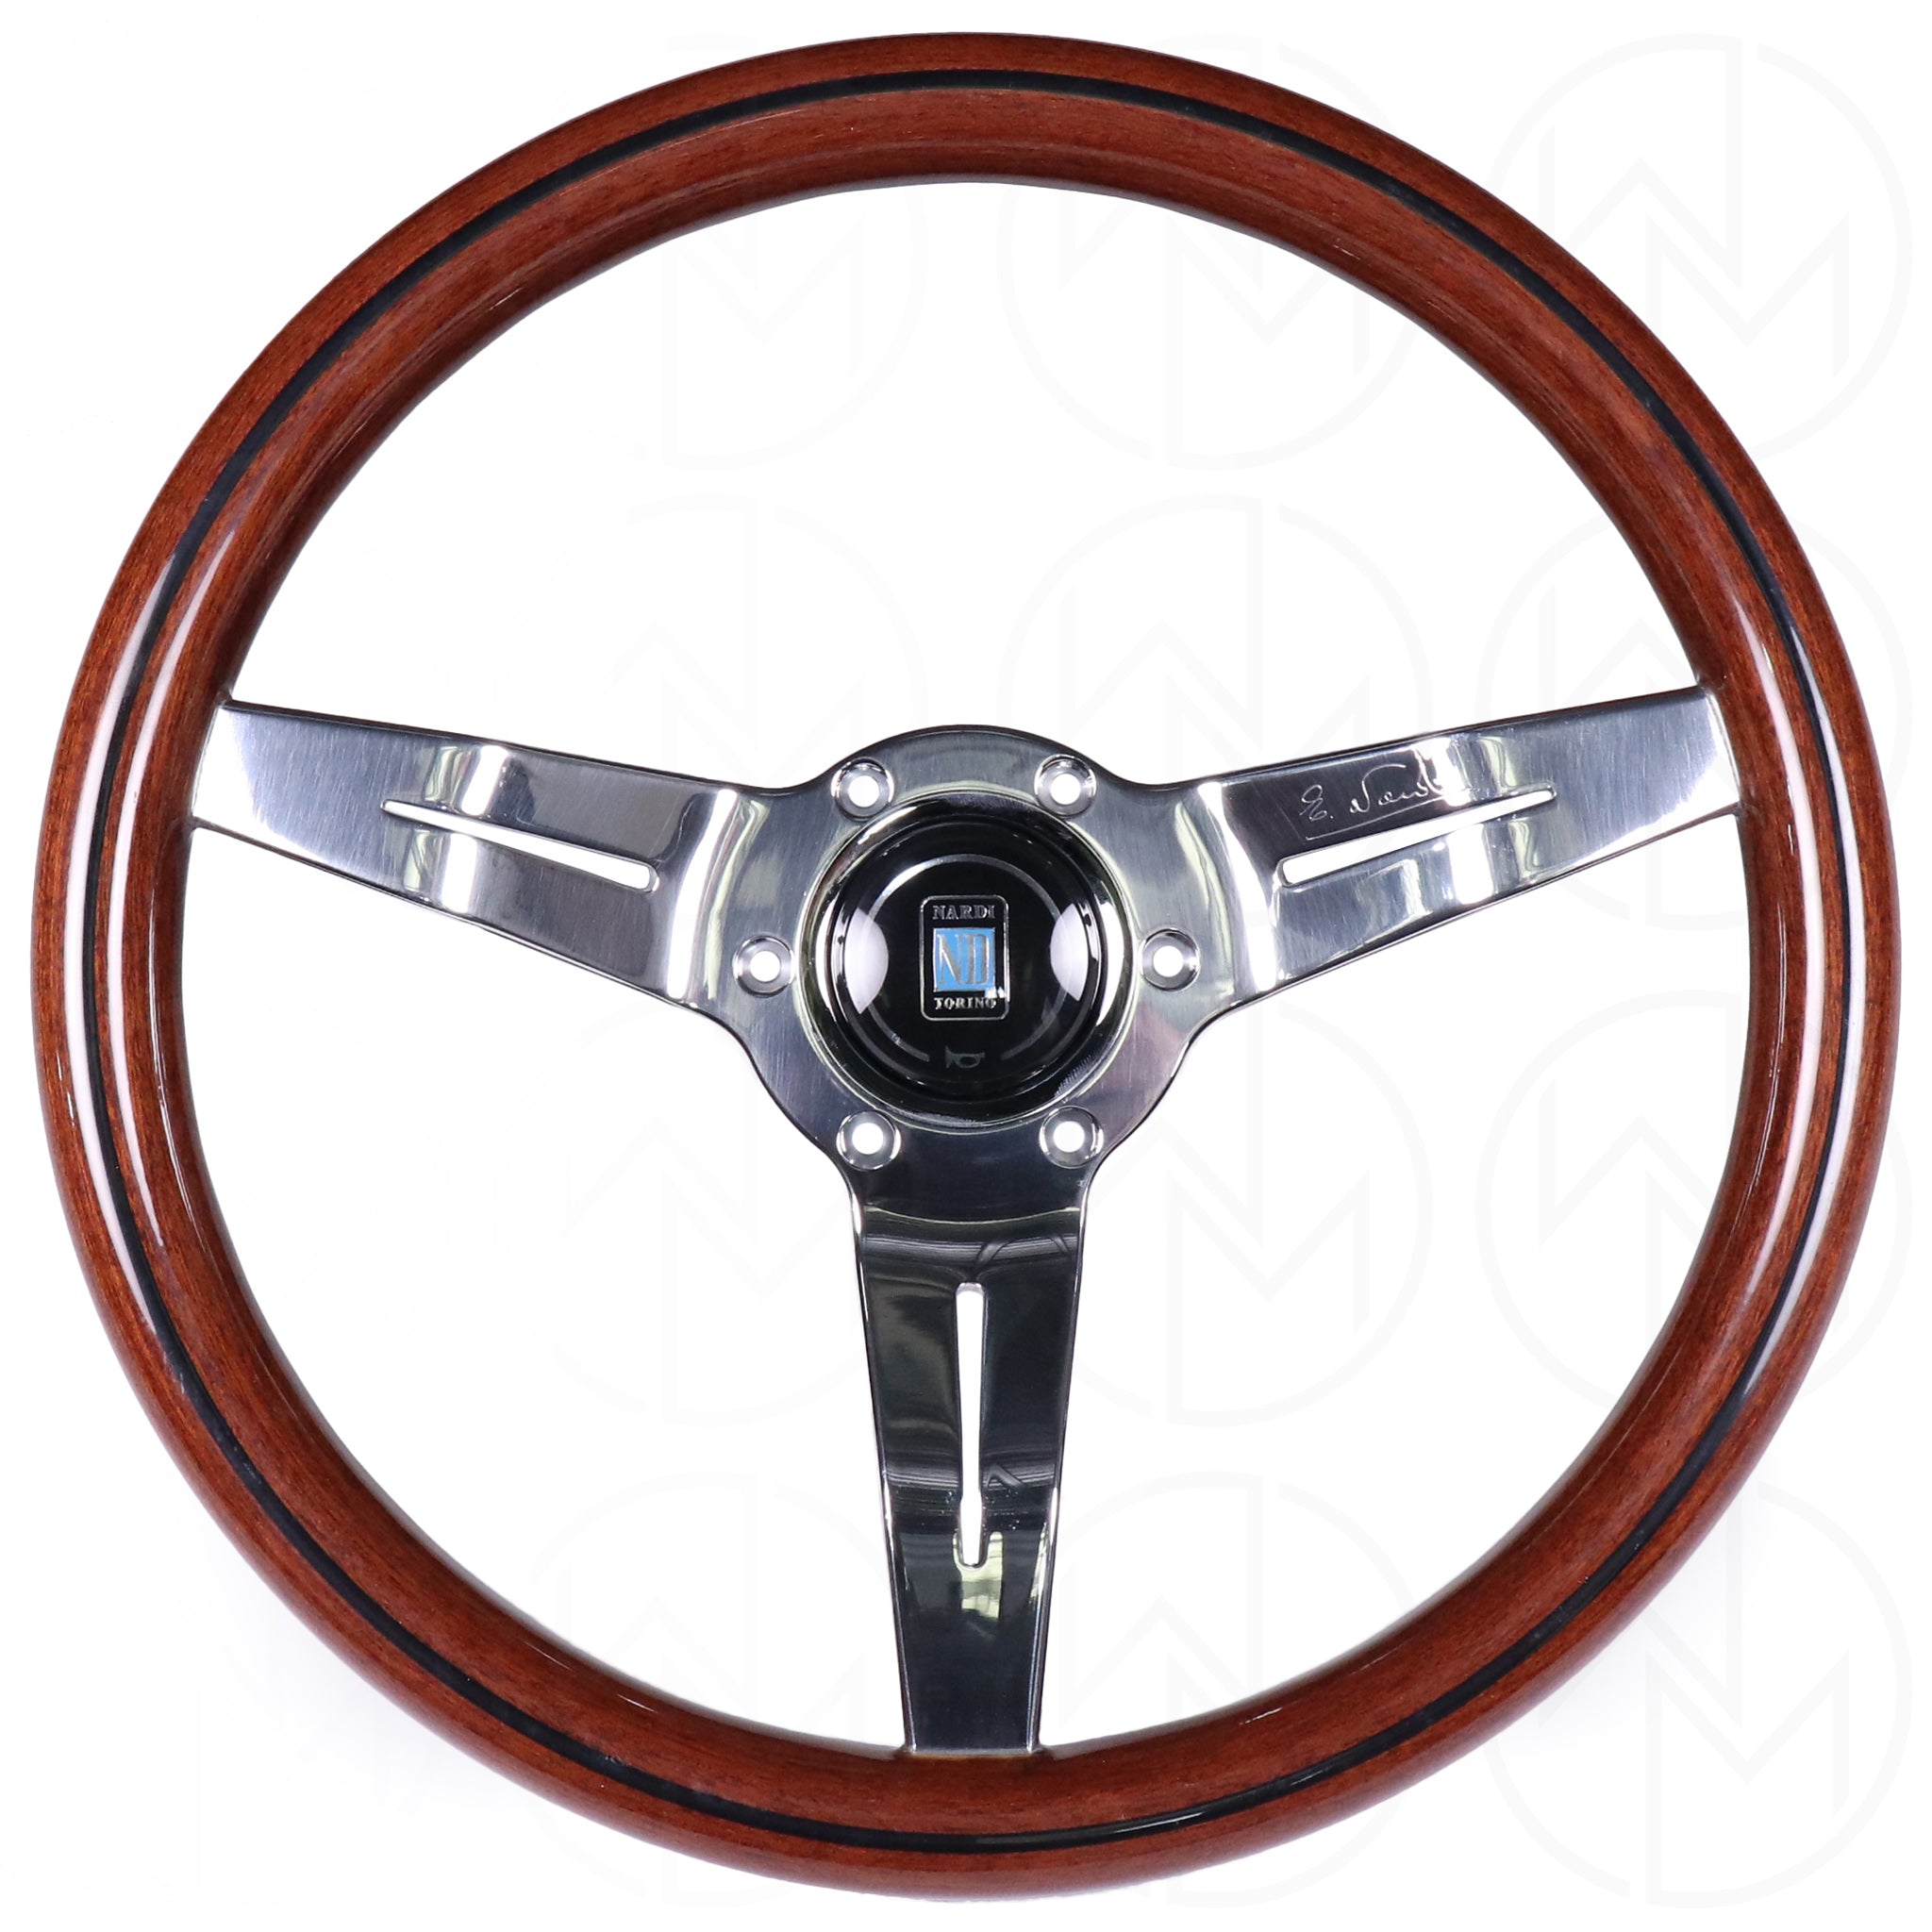 Nardi Wood Deep Corn Steering Wheel - 330mm Polished Spokes